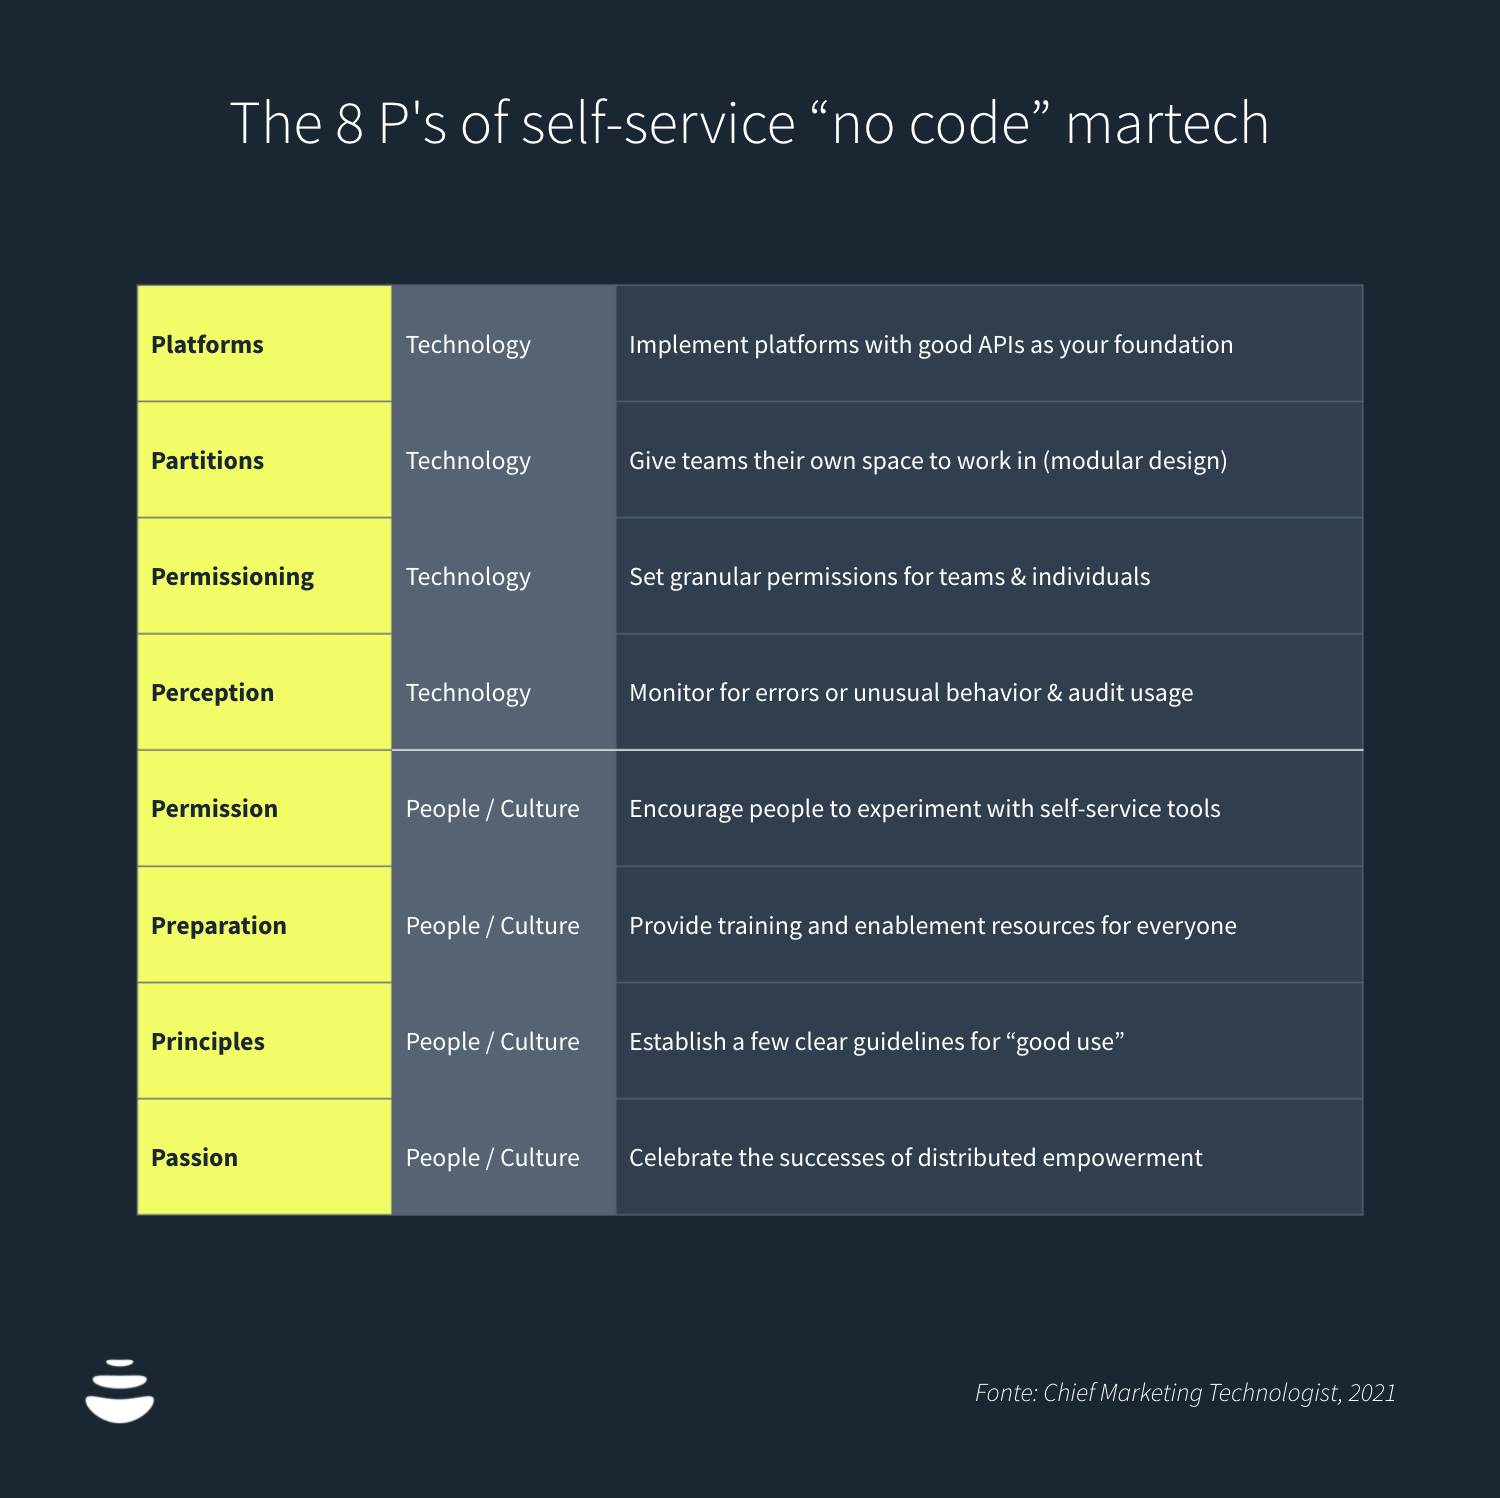 The 8 P's of self-service “no code” martech